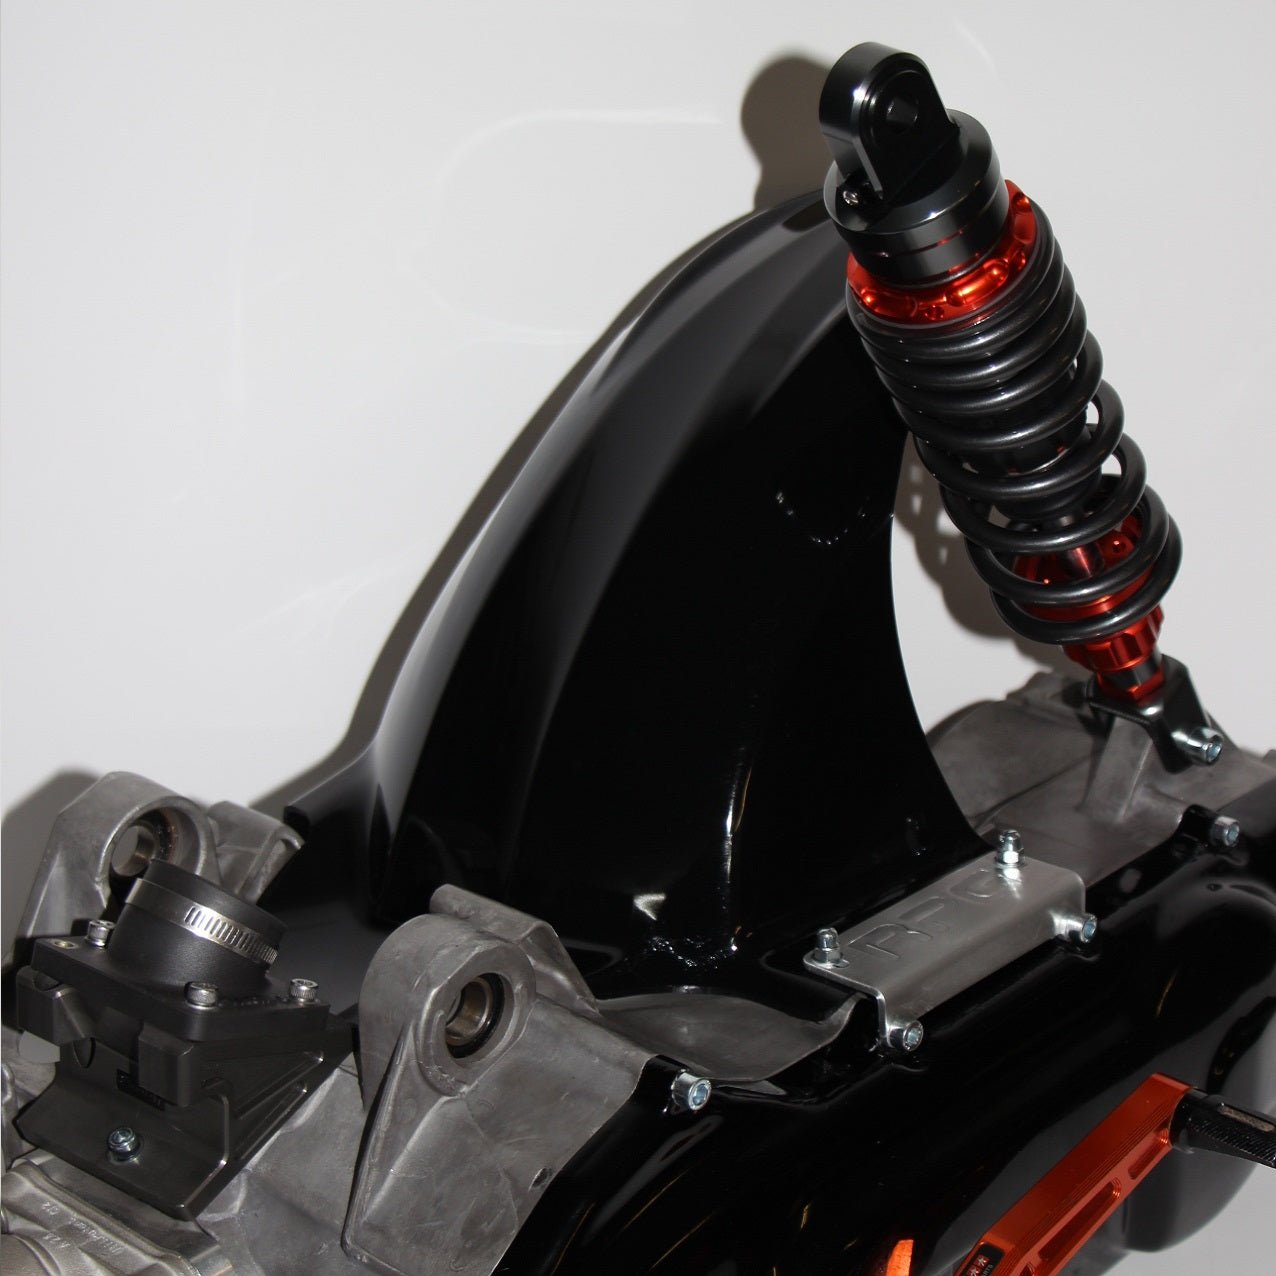 RPG Bremskit 280mm Oversize + RPG Wave Bremsscheibe + 4-Kolben Bremssattel  + Adapter für Yamaha Aerox - RacingProjectGermany Bremsen-Sets 4-kolben 4K  4k aufnahme